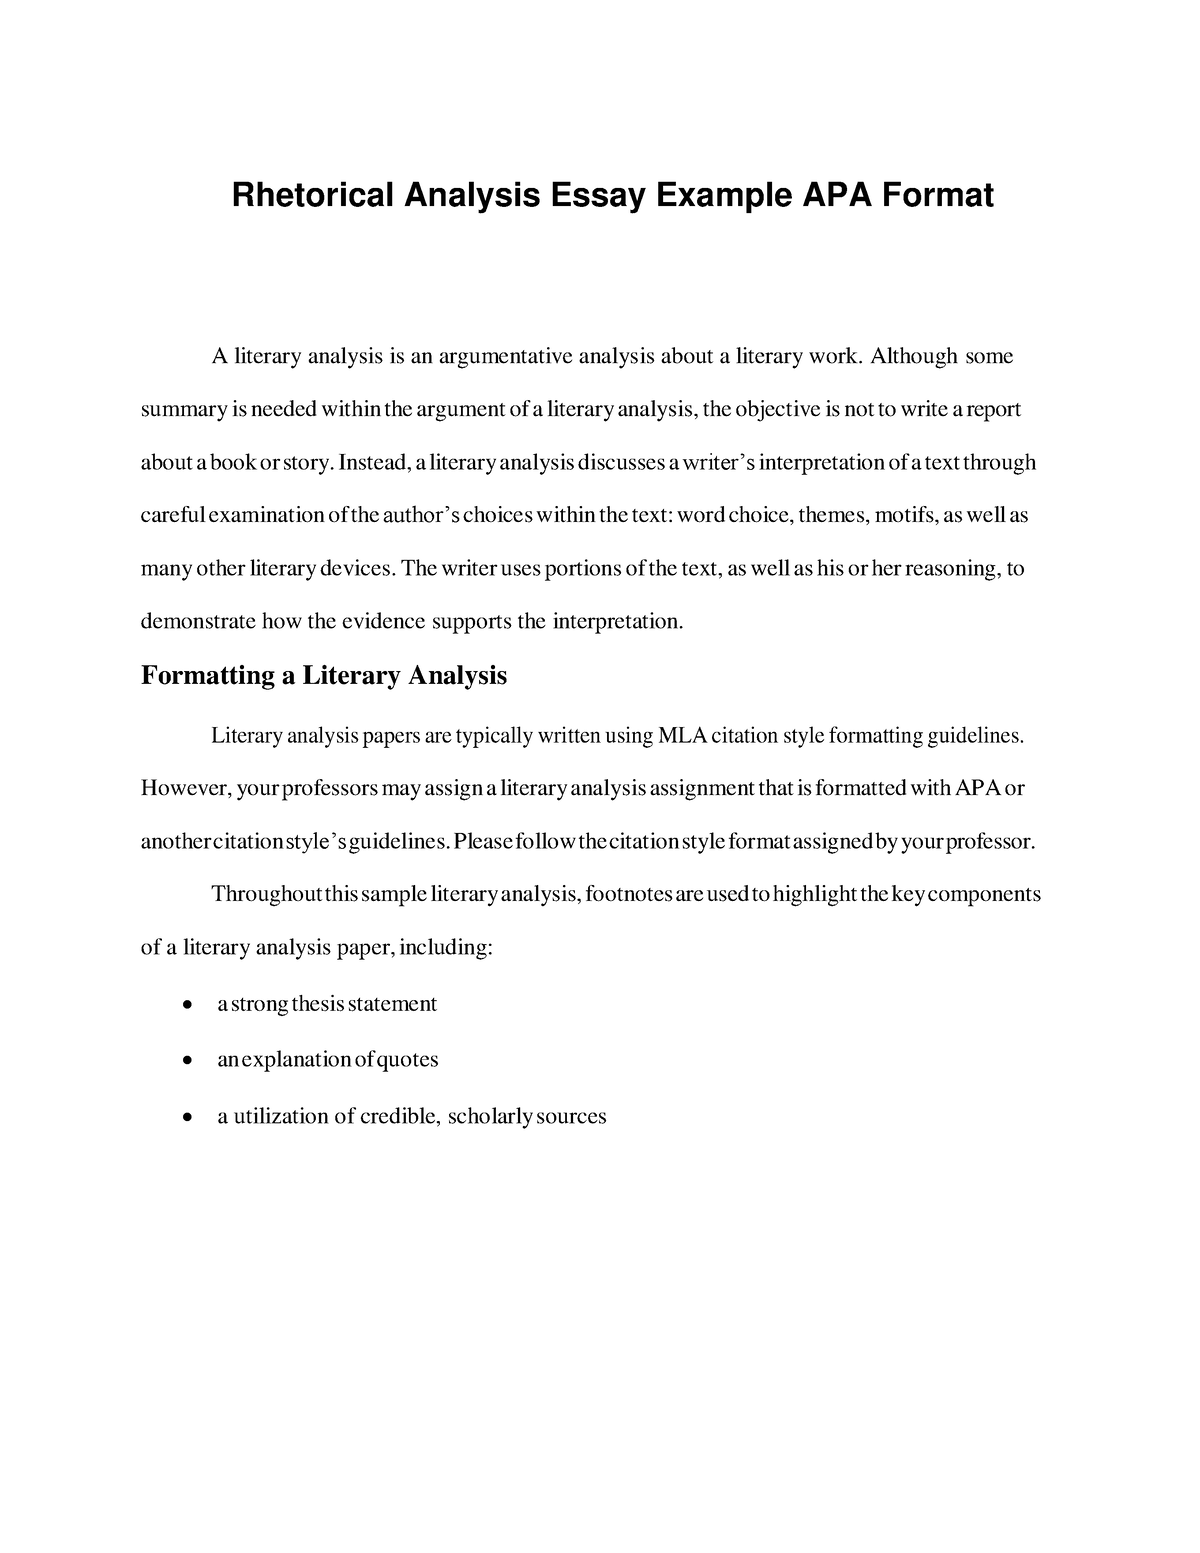 rhetorical analysis essay apa format